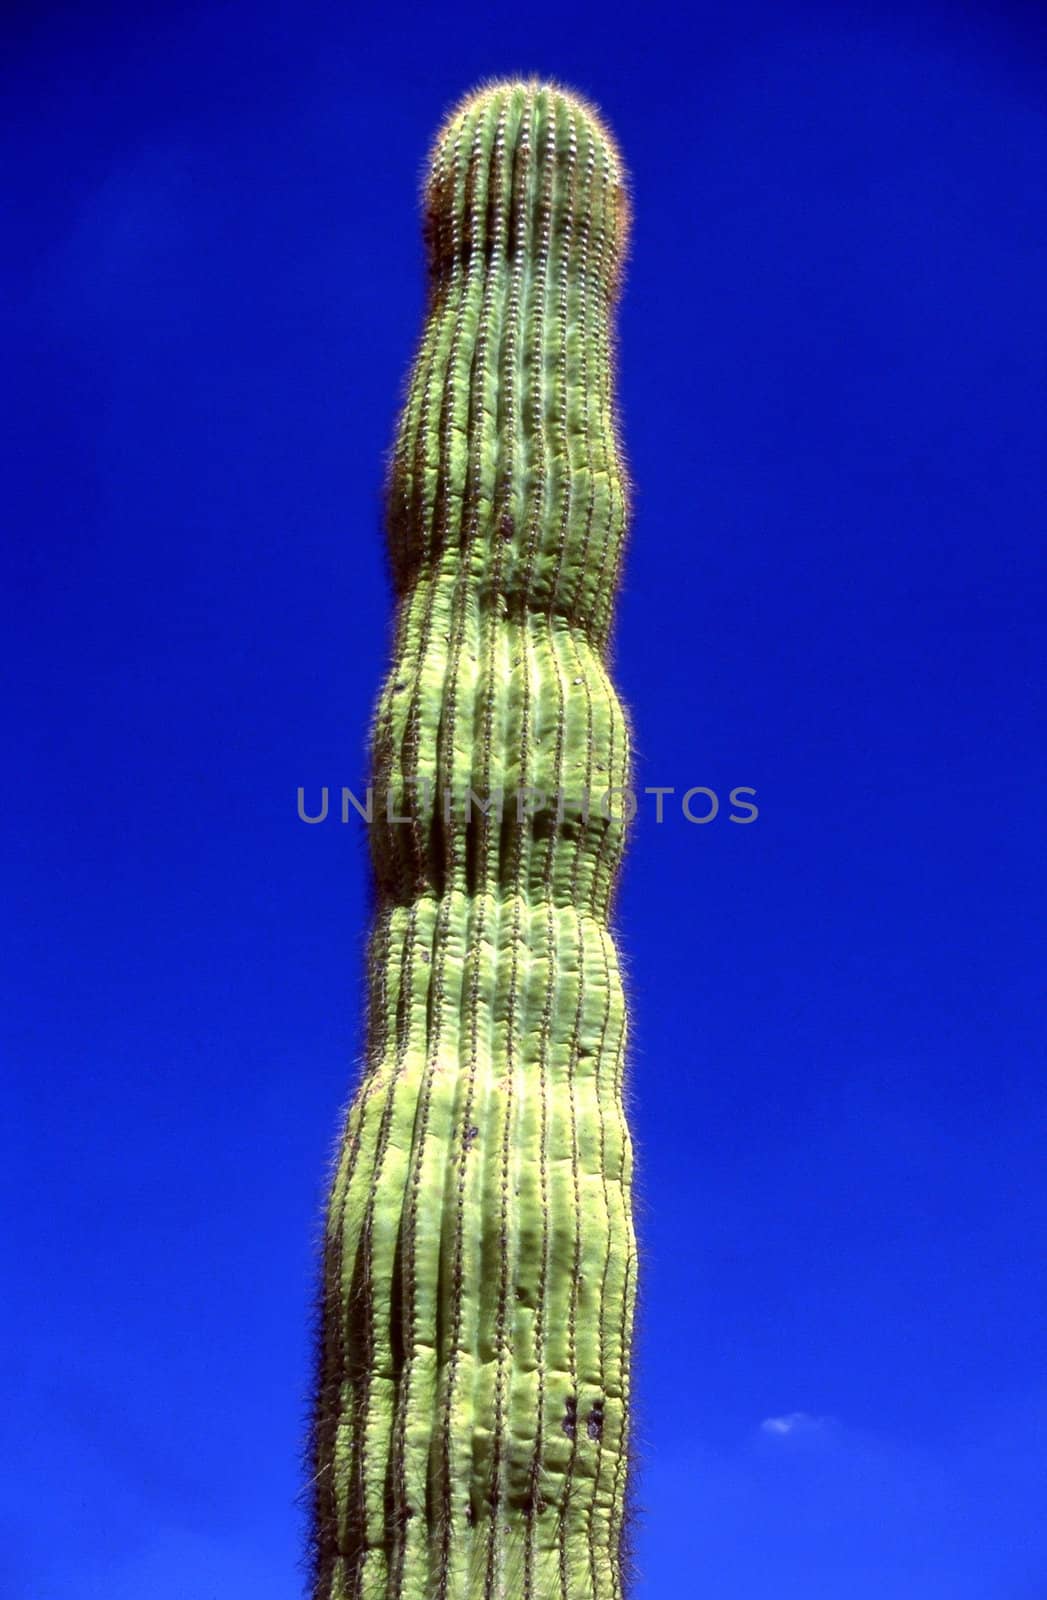 Saguaro cactus by jol66